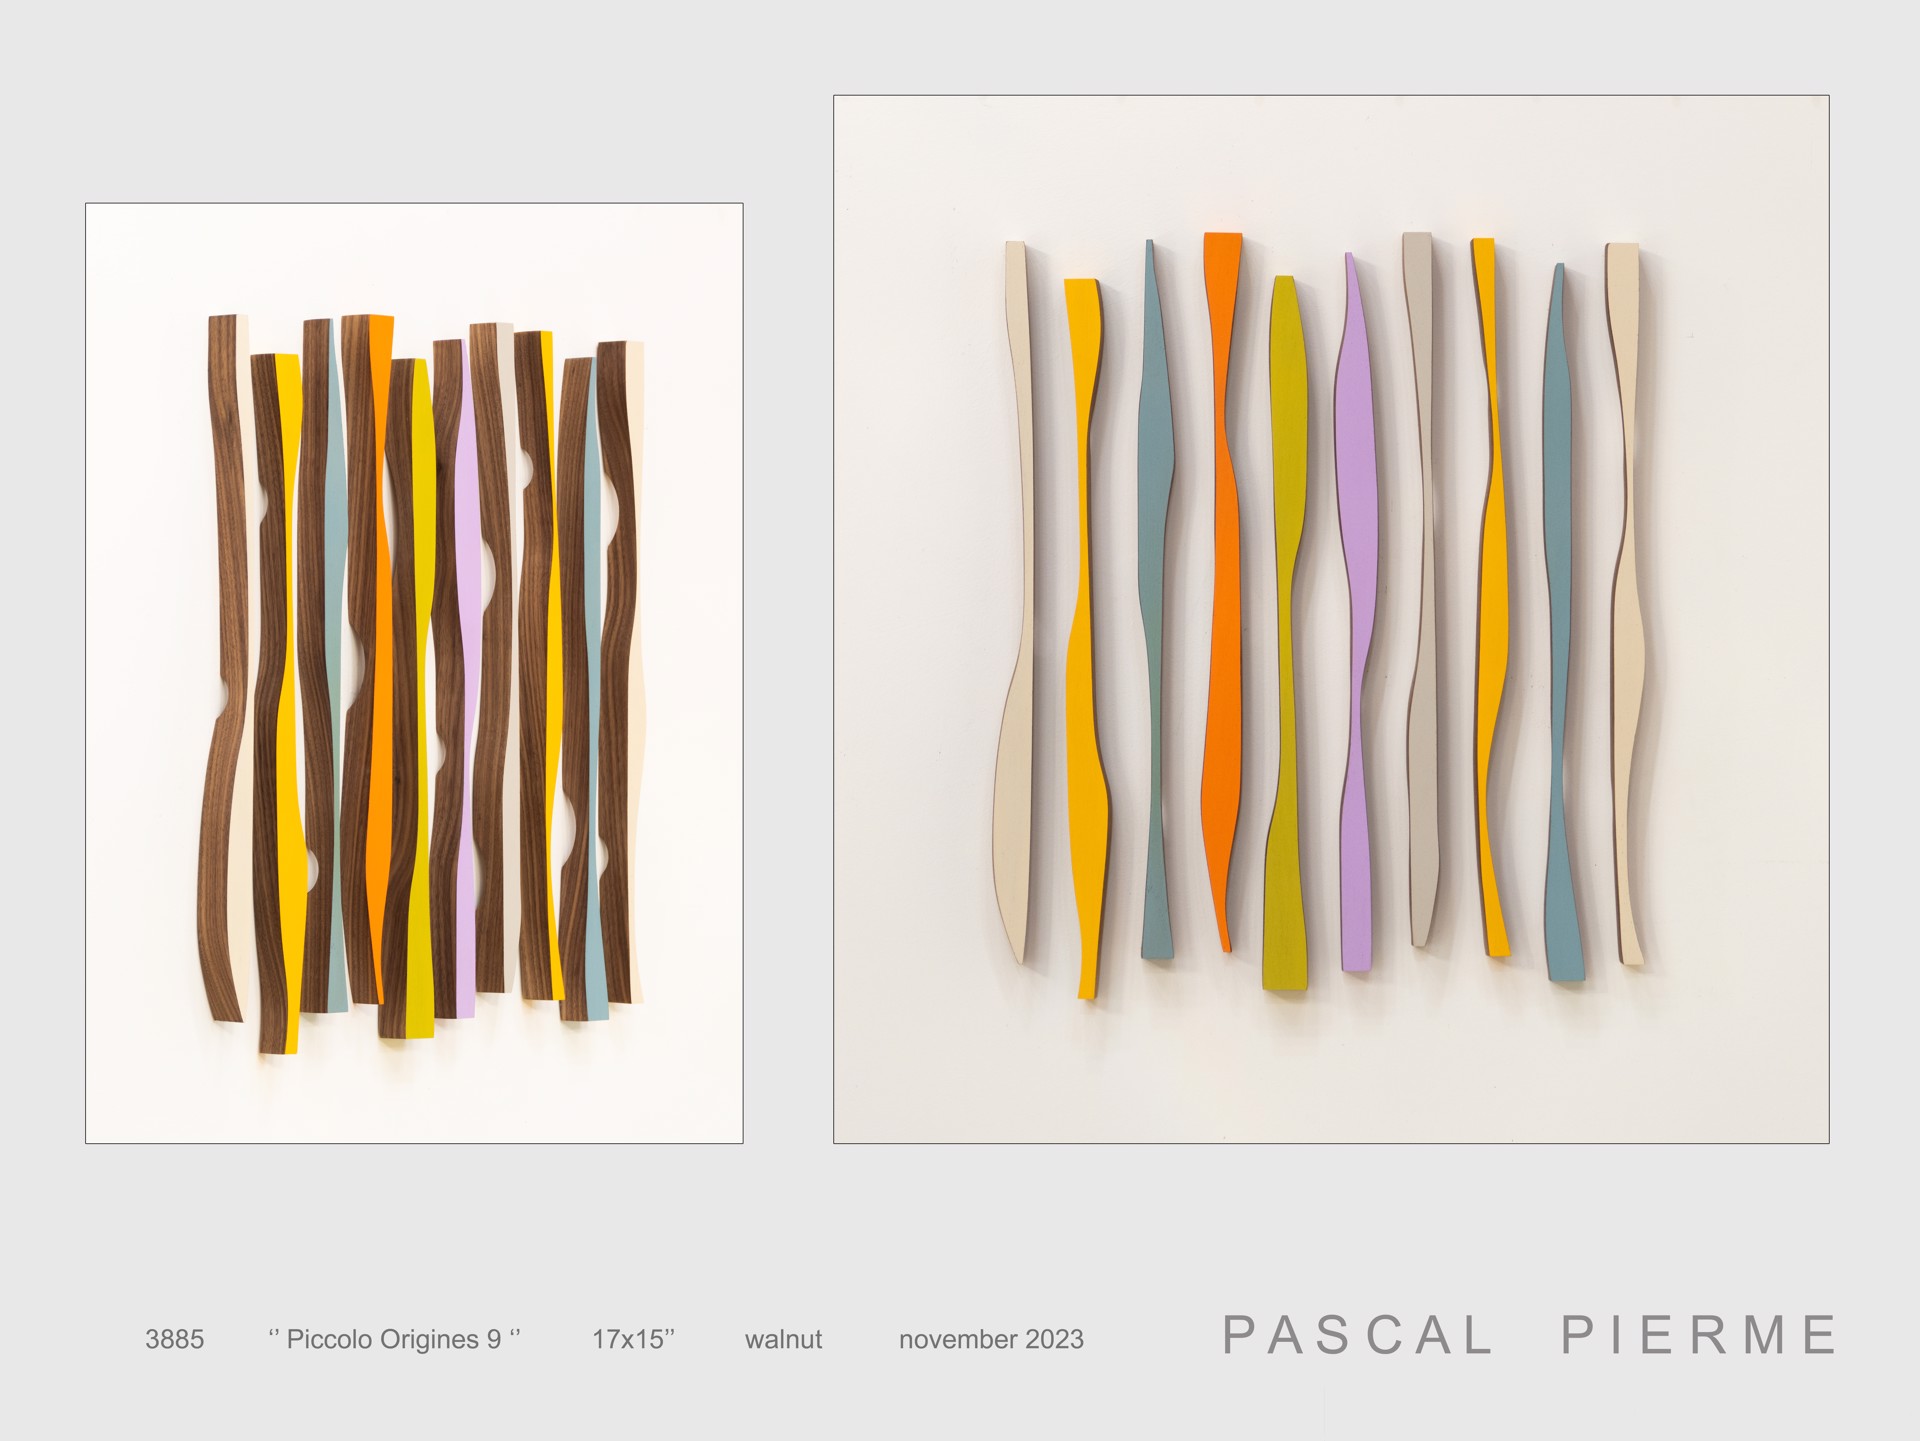 Piccolo Origines 9 by Pascal Piermé